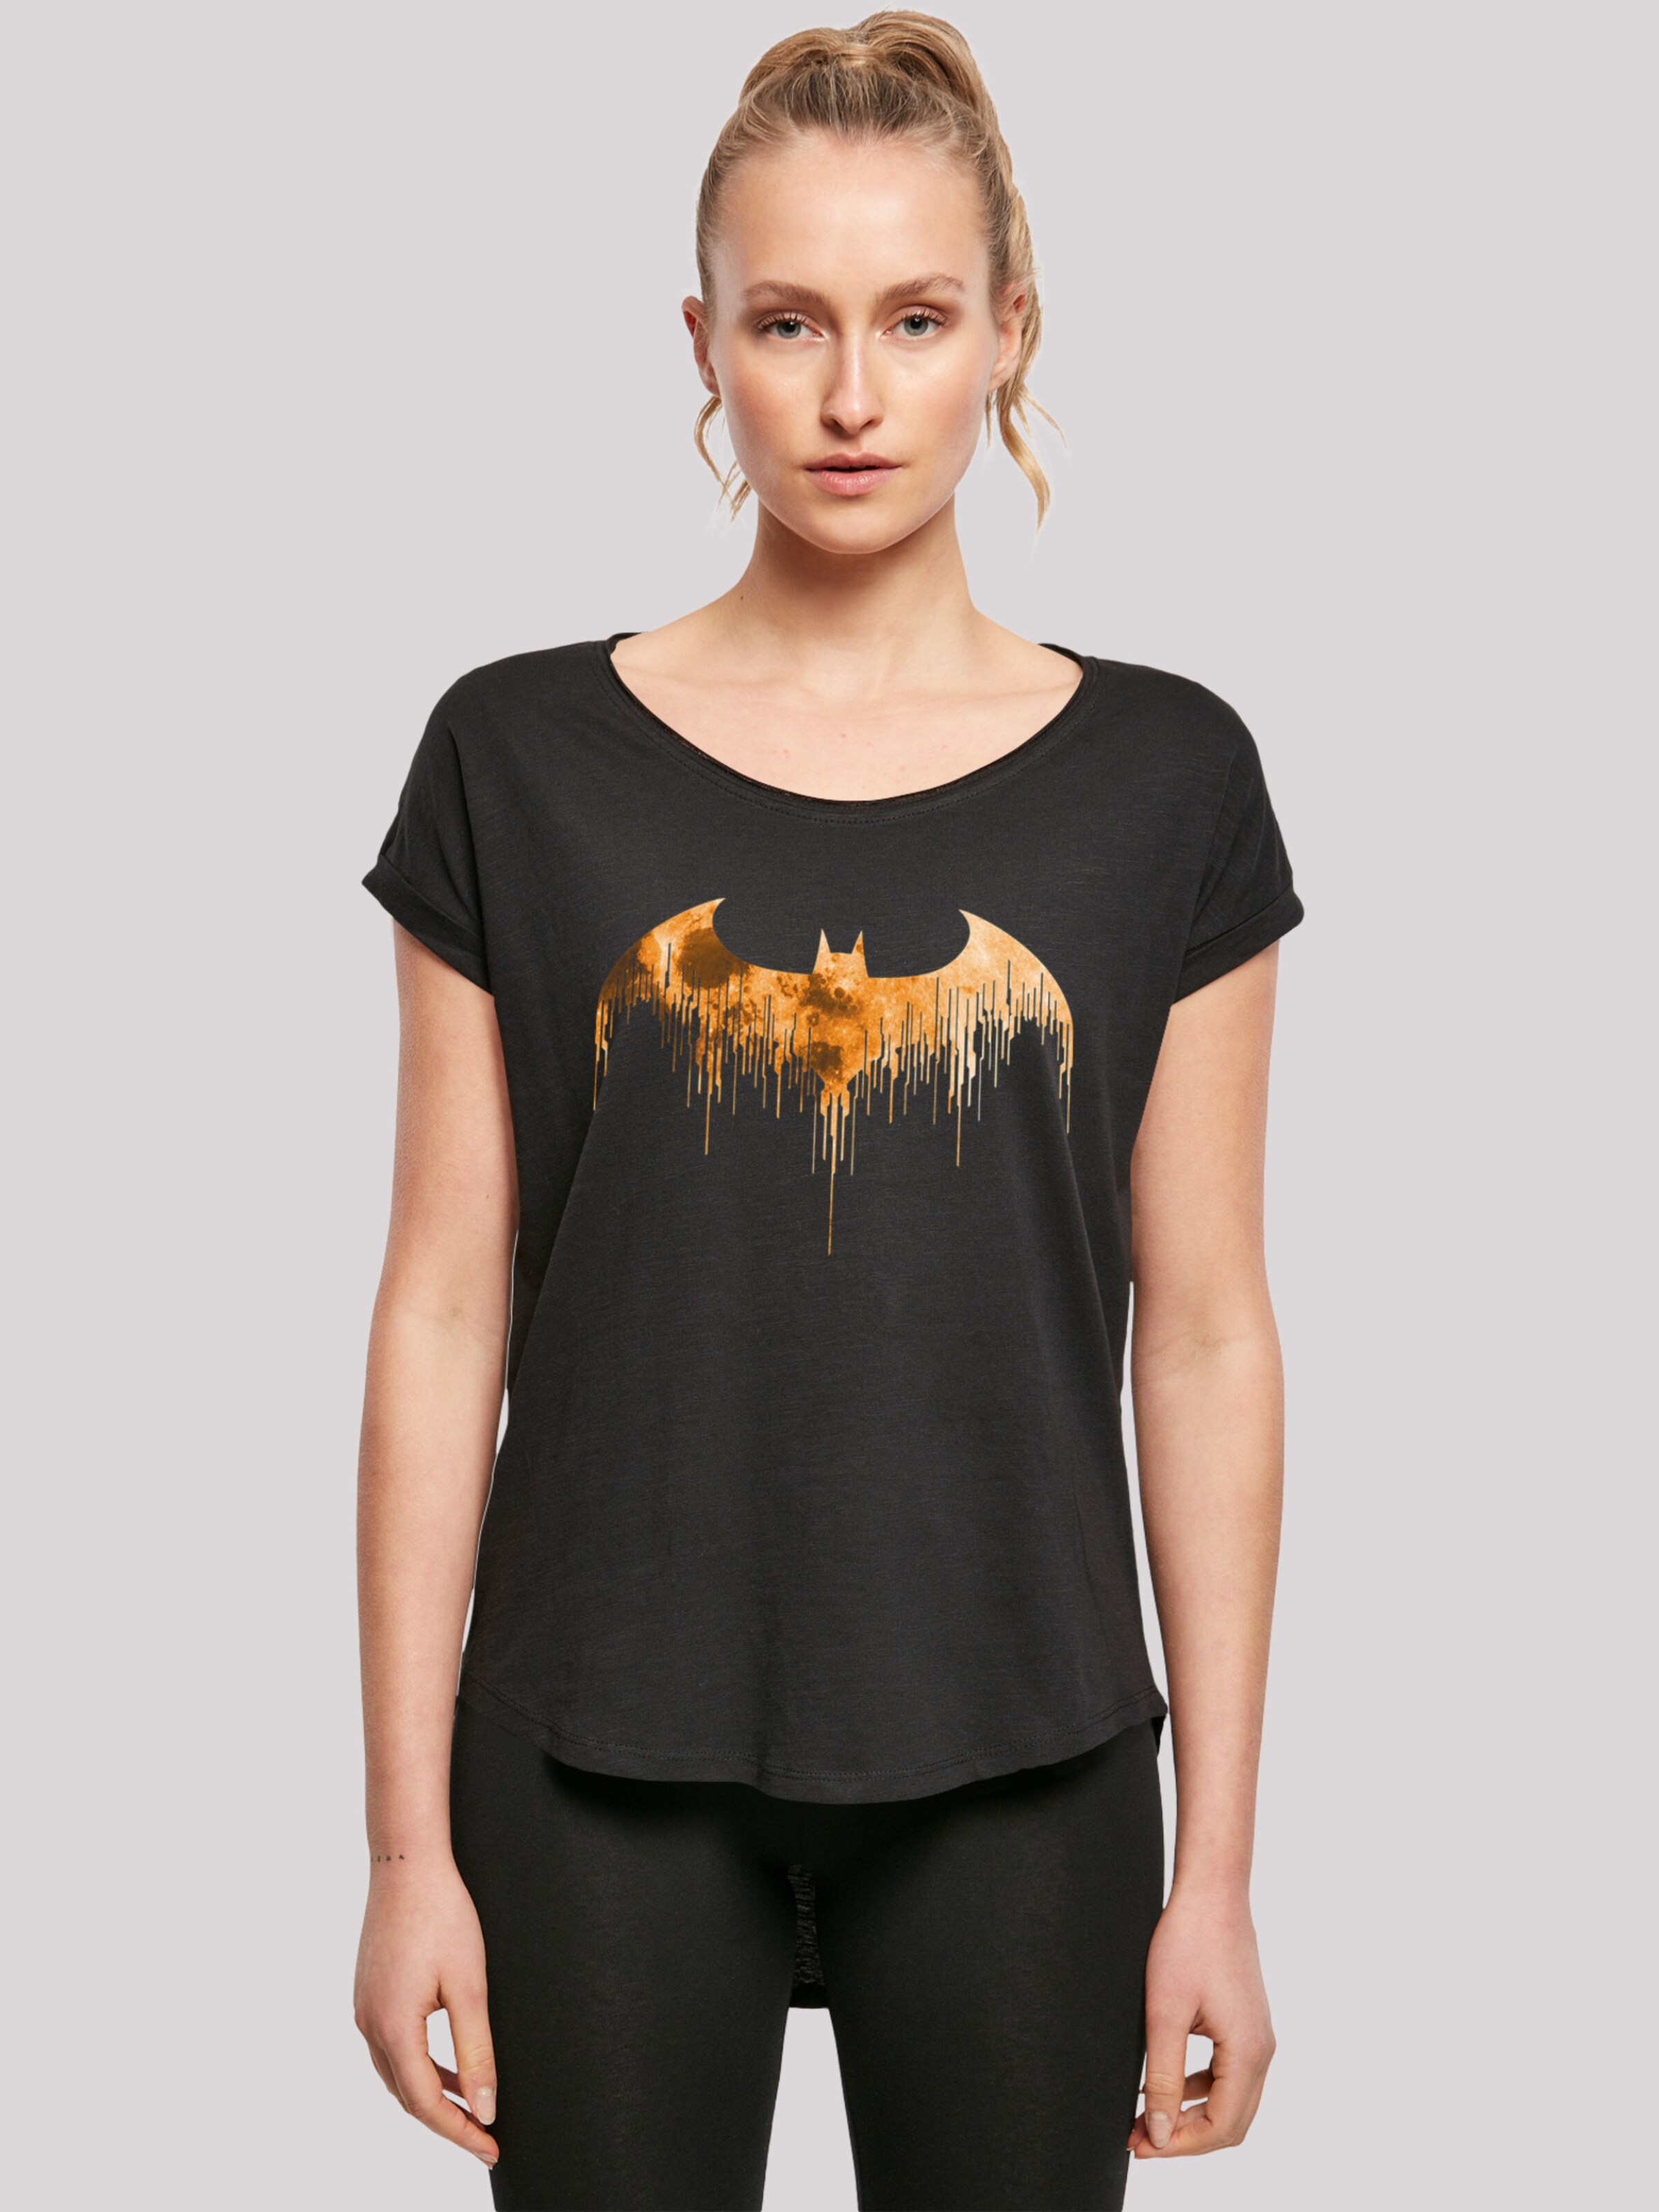 Shirt in | \'DC YOU Comics Arkham F4NT4STIC ABOUT Moon\' Knight Batman Halloween Black